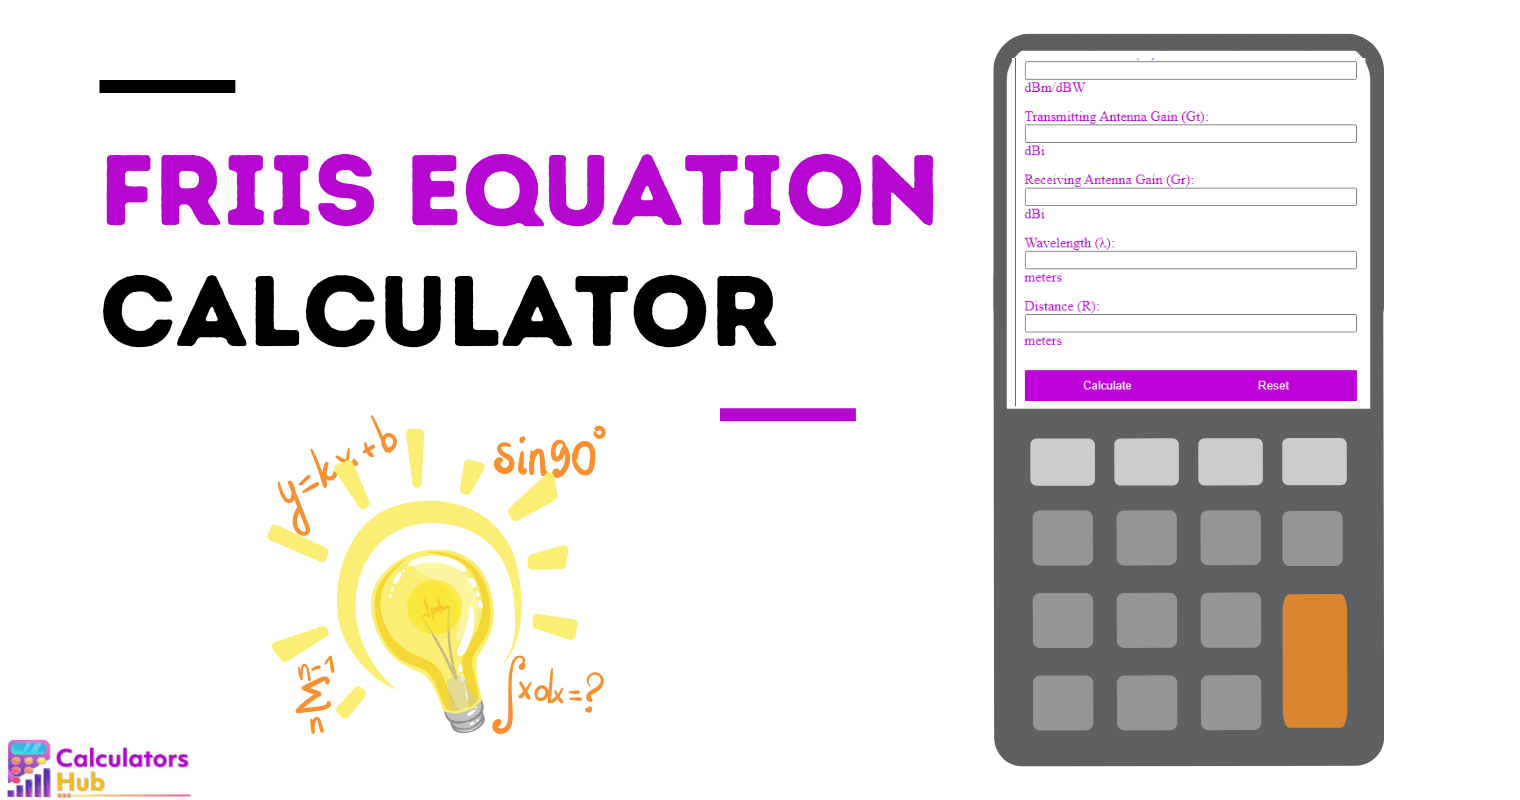 Friis Equation Calculator